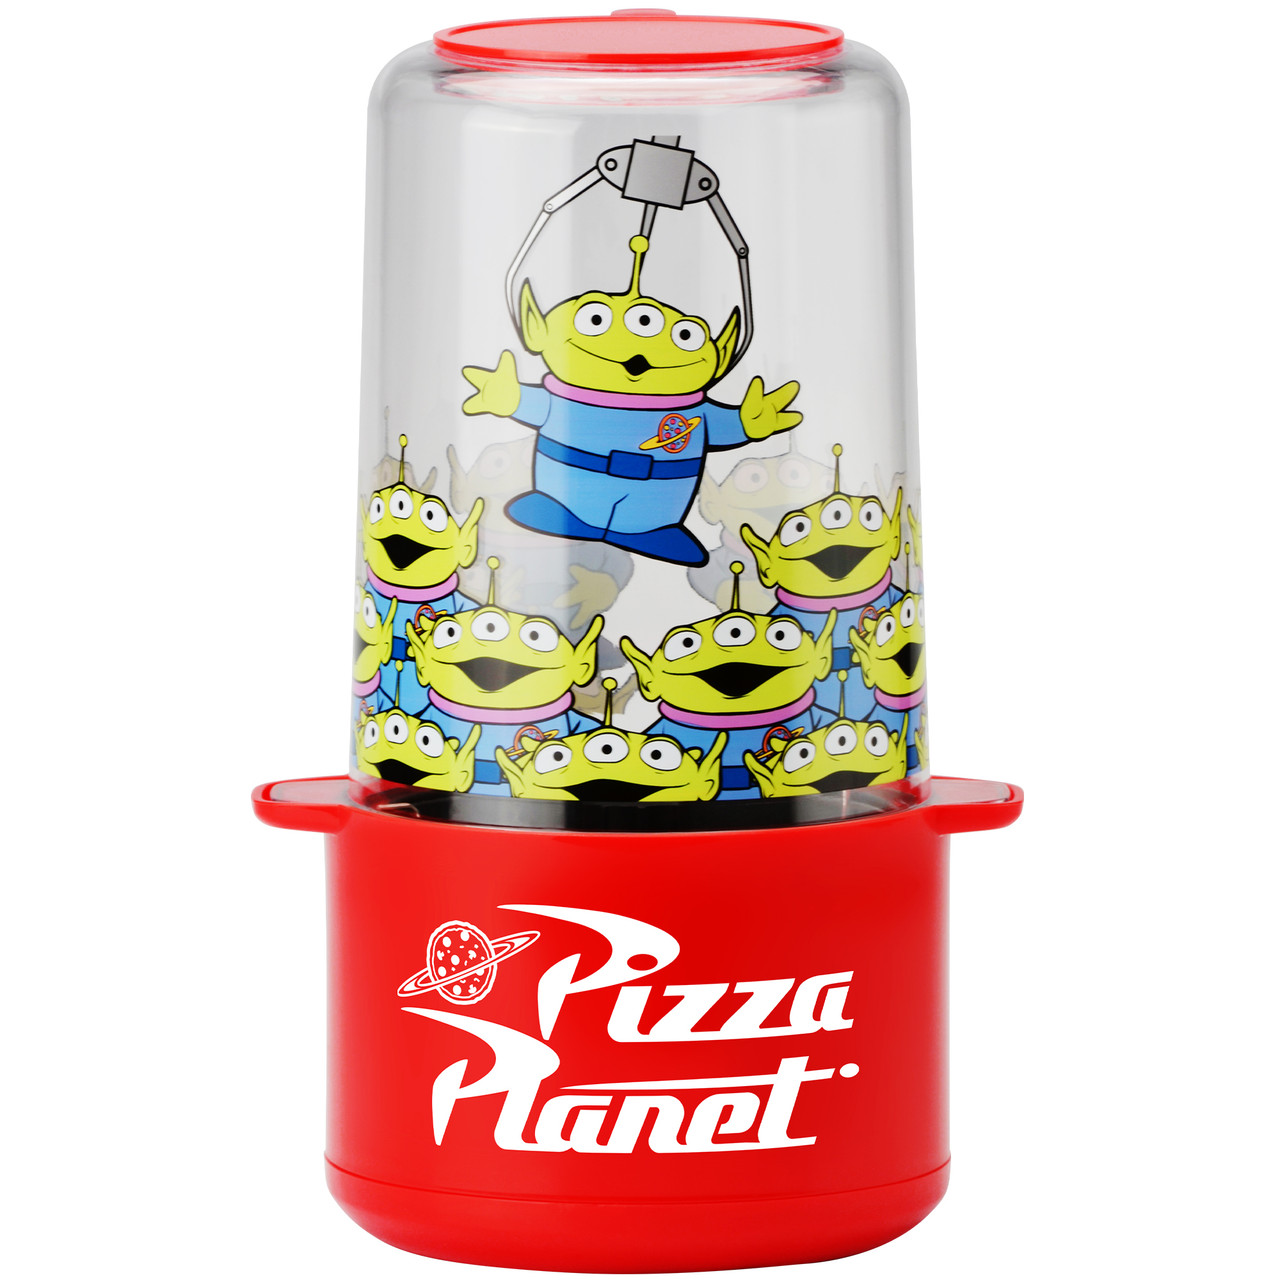 Disney Toy Story Kettle Style Popcorn Popper